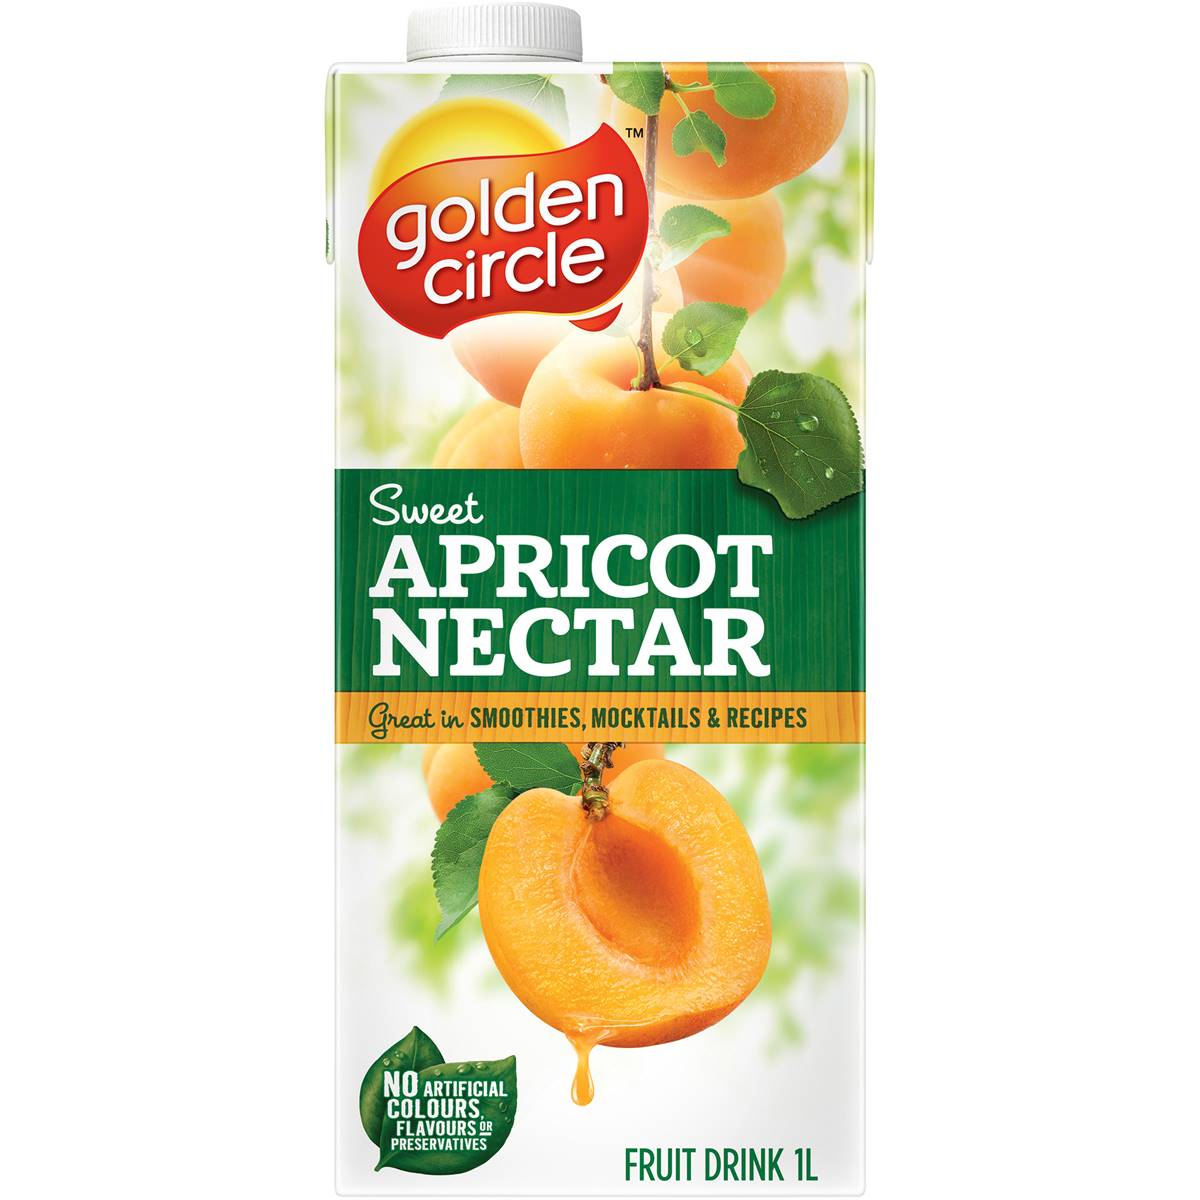 Calories in Golden Circle Apricot Nectar